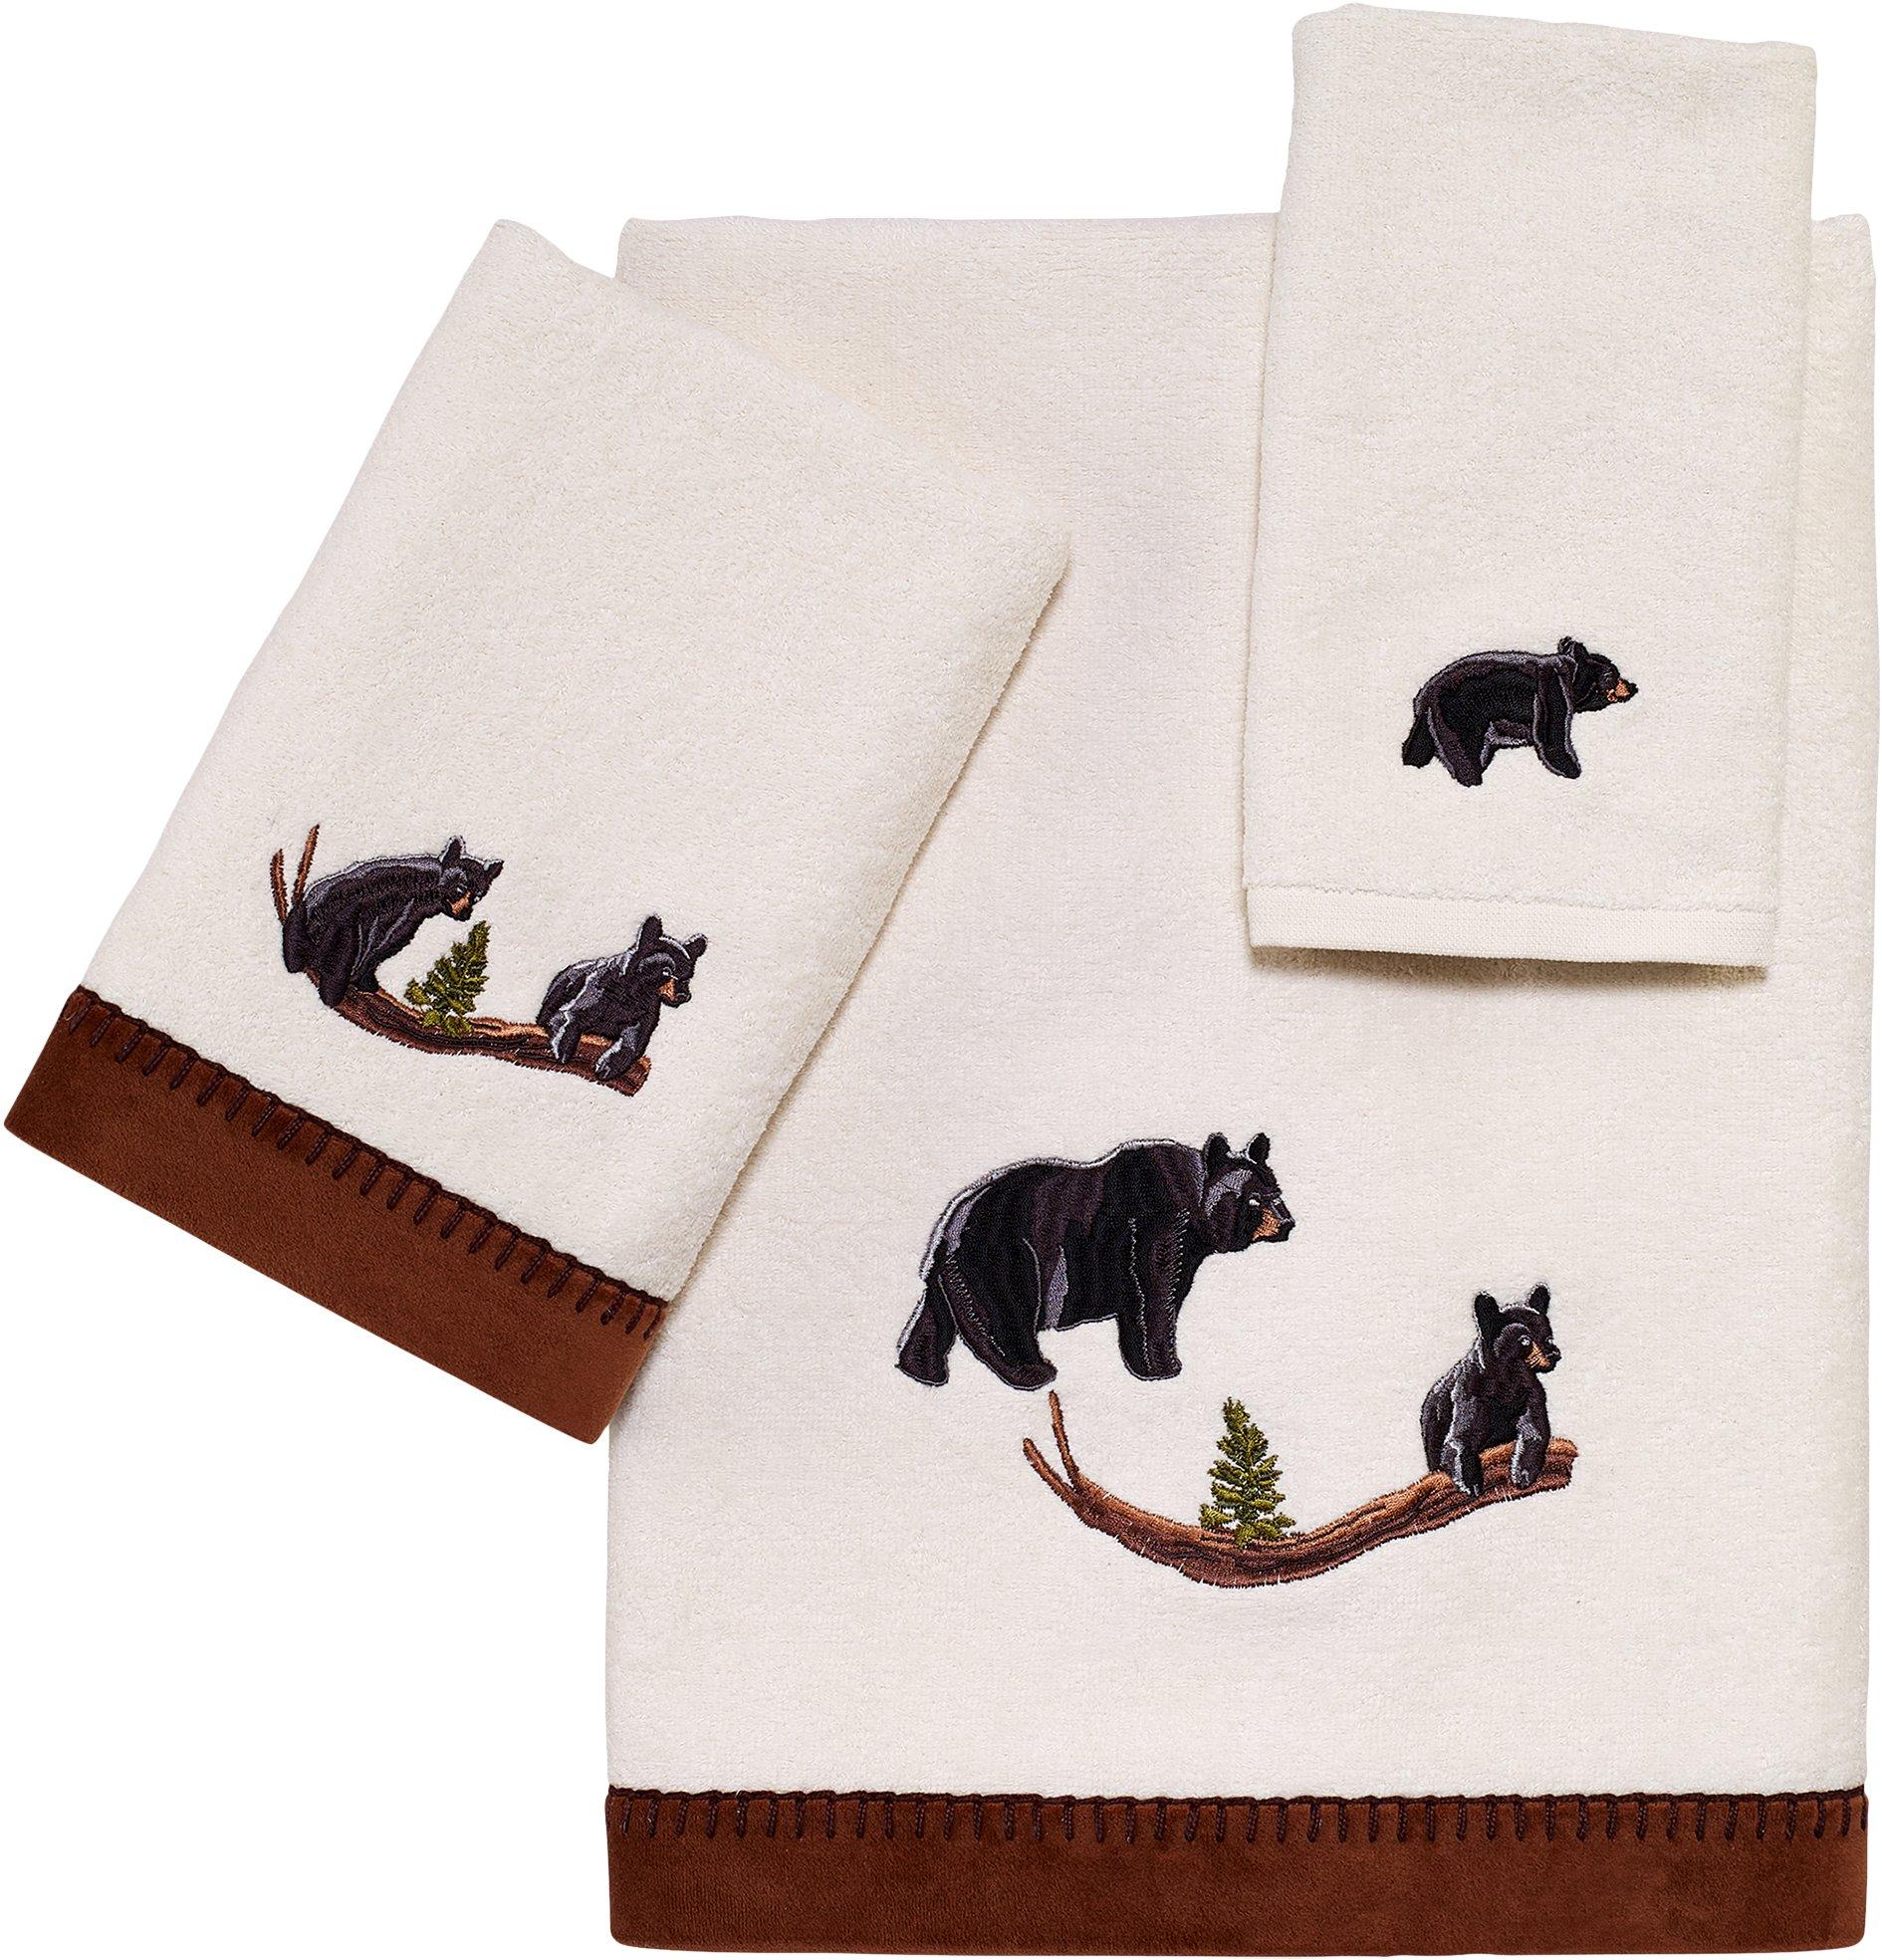 Black Bear Lodge Towel Collection